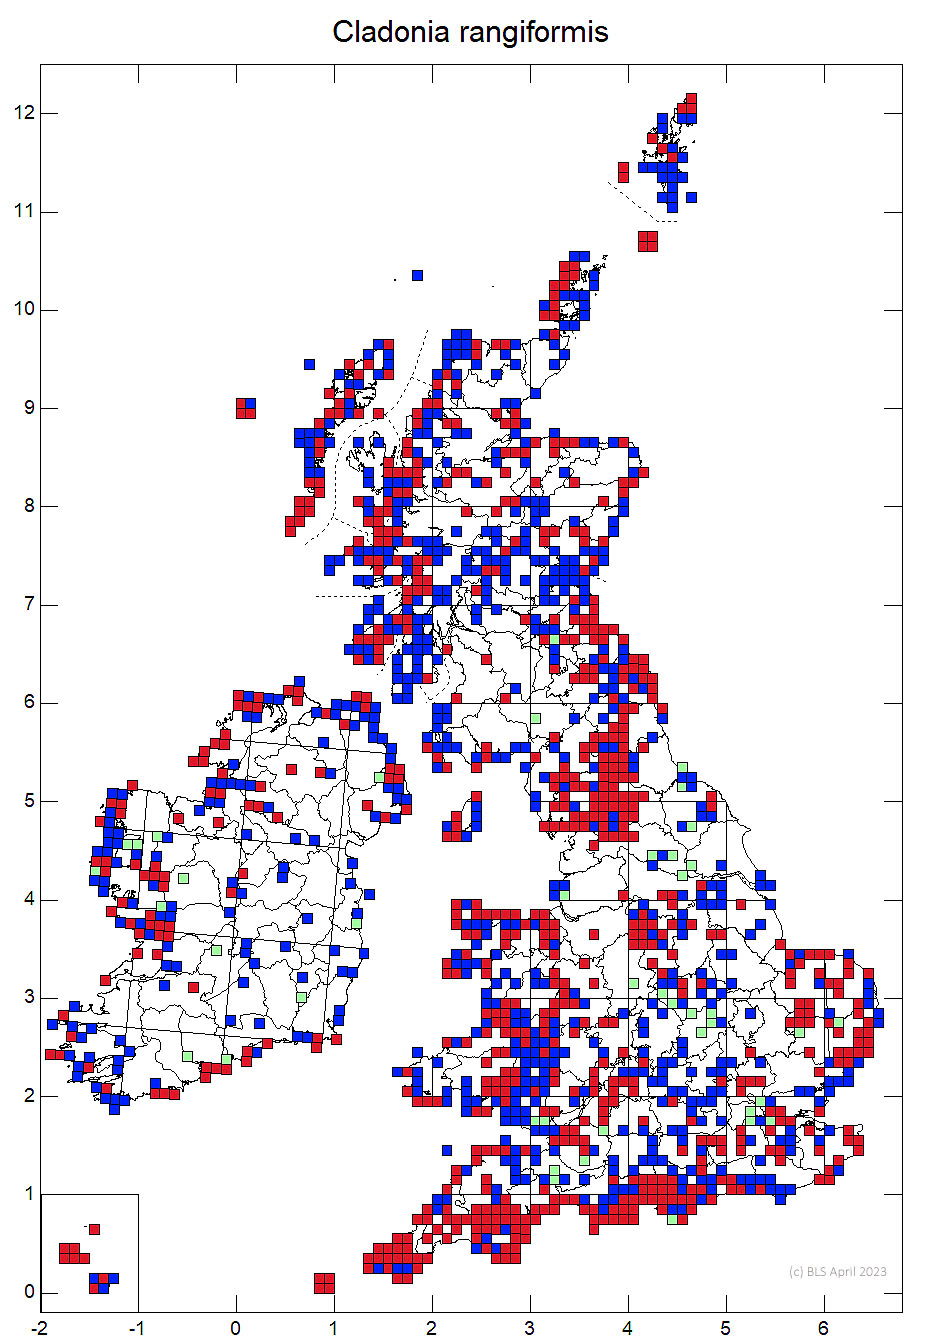 Cladonia rangiformis 10km sq distribution map